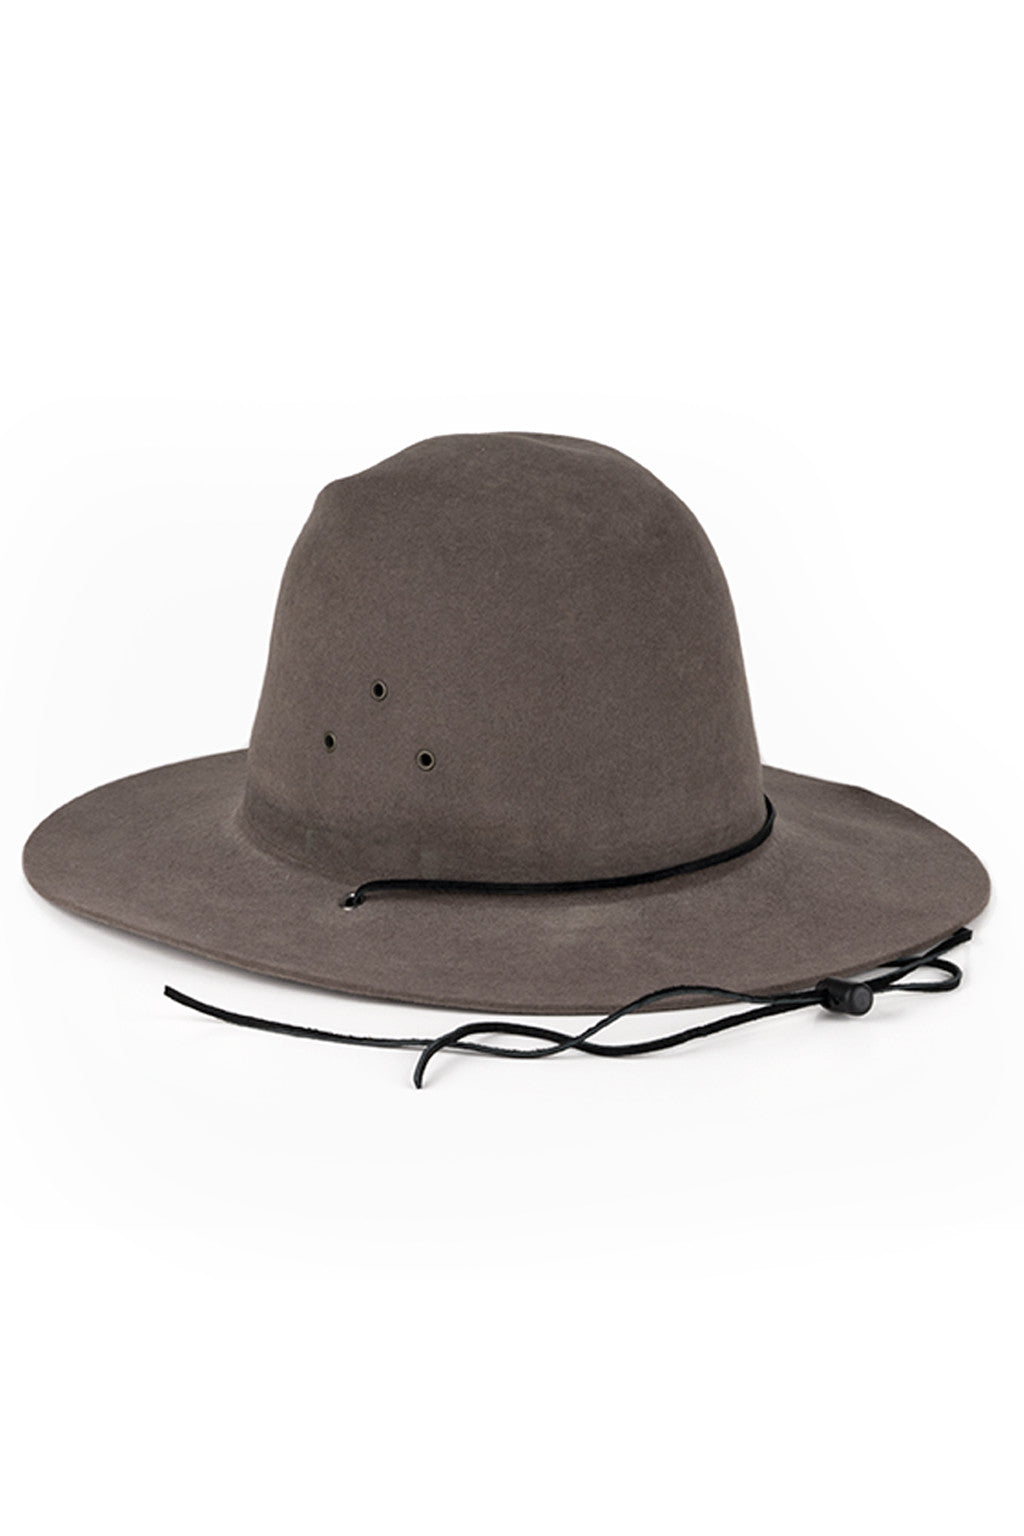 BROOKES BOSWELL Vintage 033 Hat, Grey Fur Felt / Black Leather Drawstring